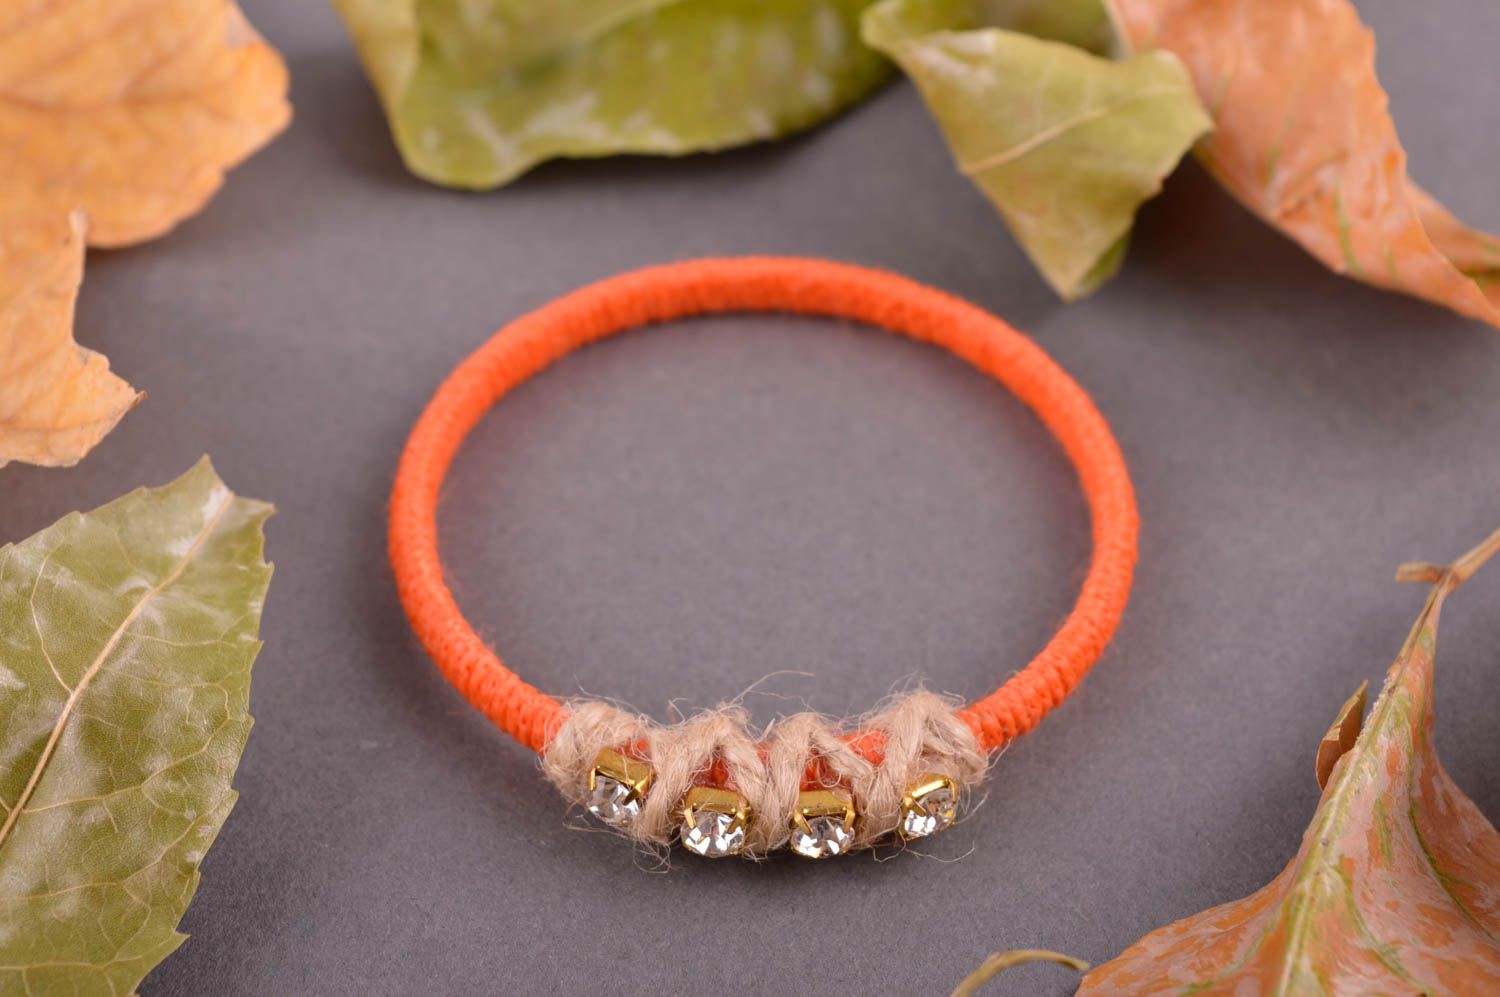 Handmade bracelet wrist bracelet designer accessories for girls gifts for her photo 1